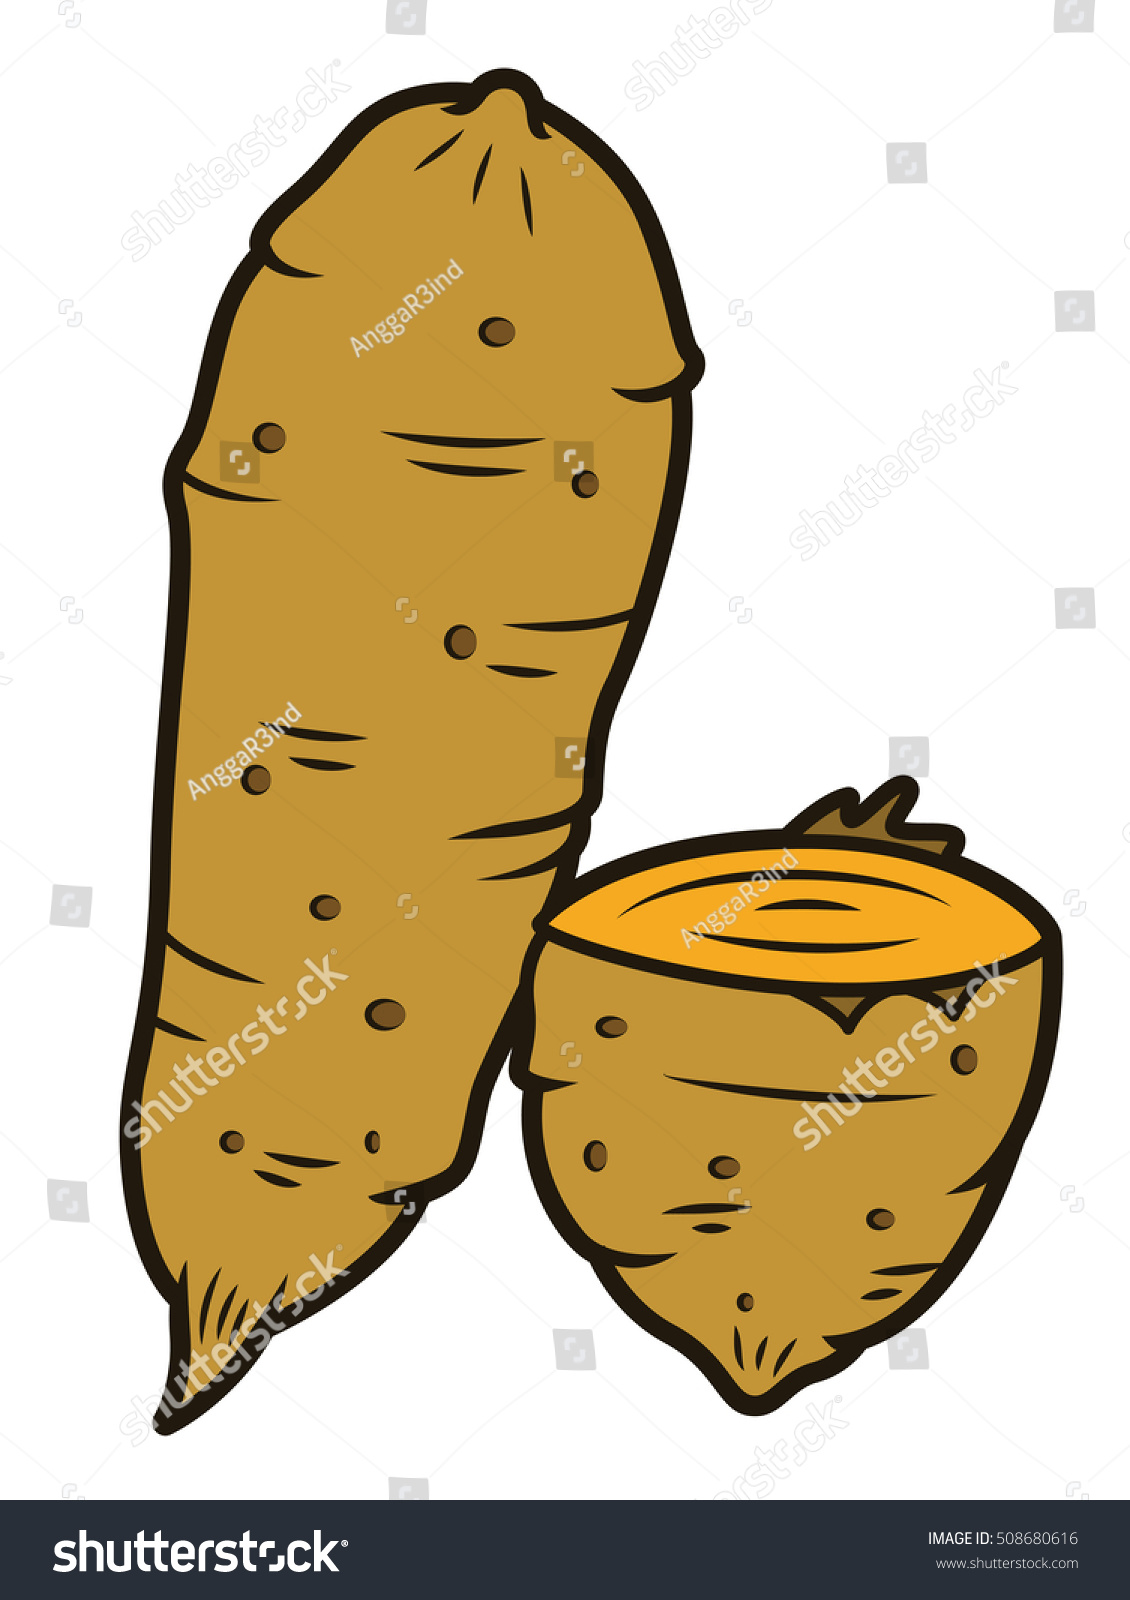 Download Sweet Potato Stock Vector Illustration 508680616 ...